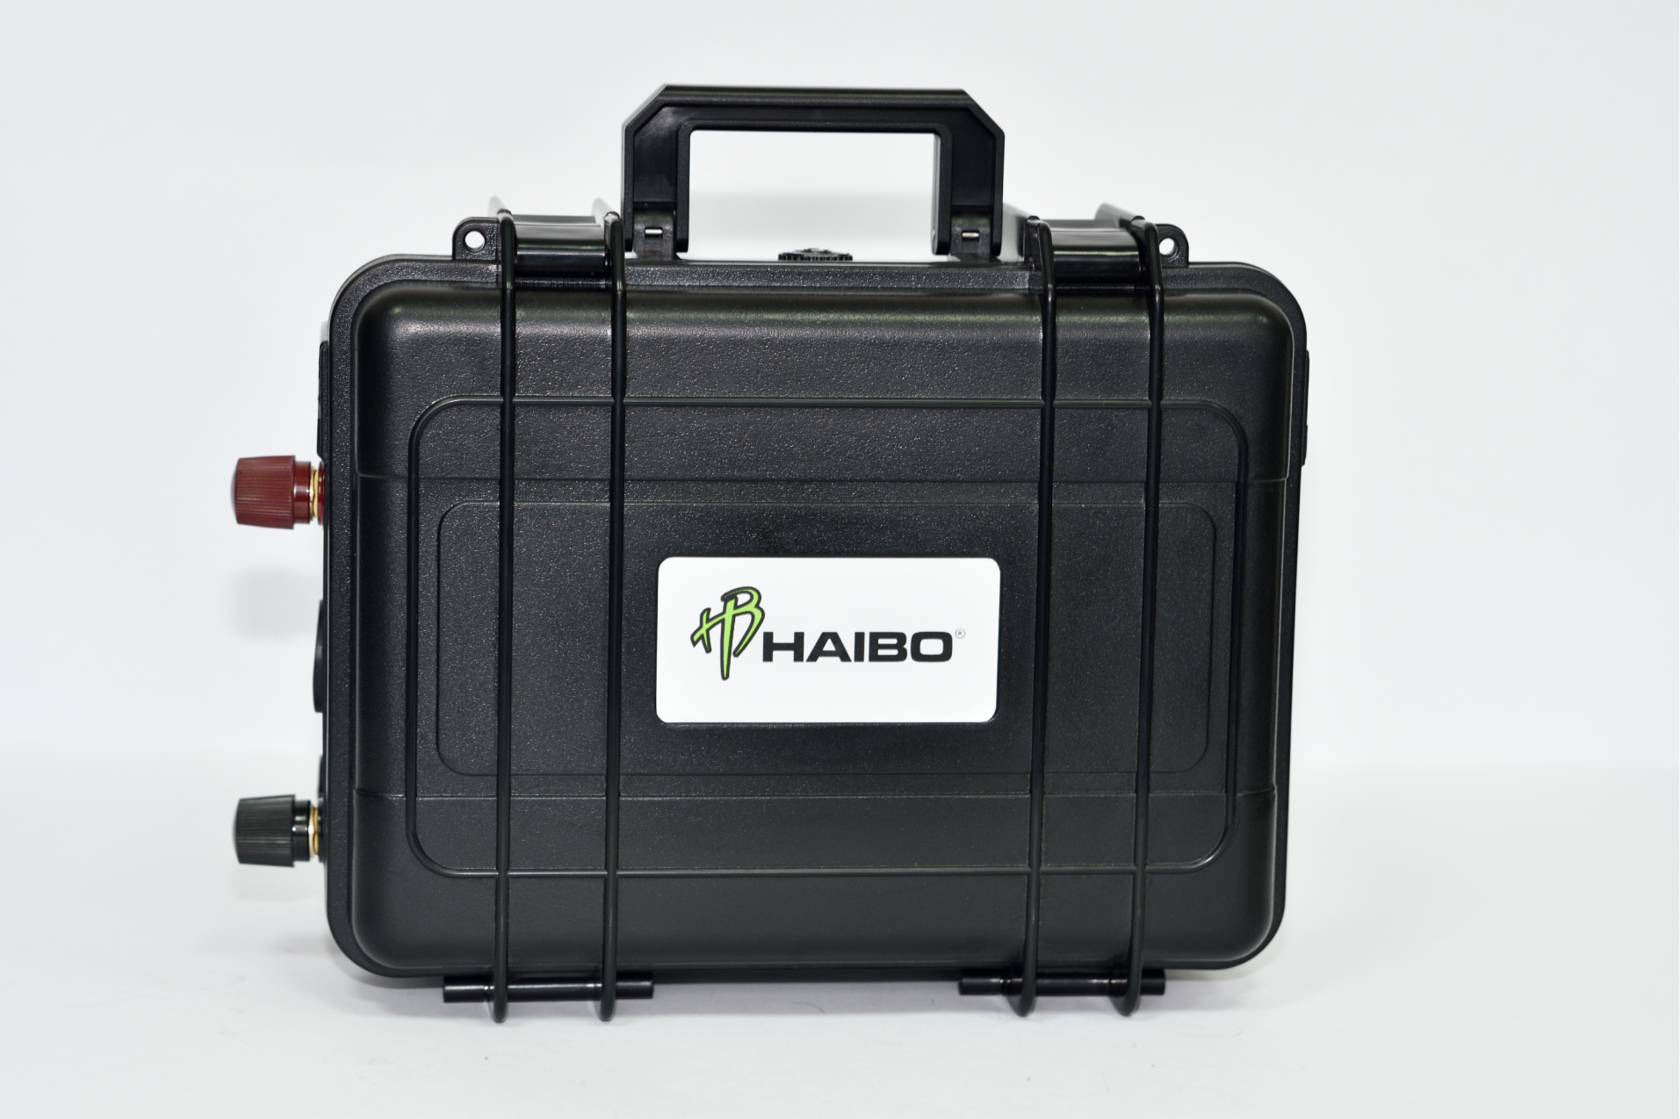 Haibo Max 12v 100ач. Haibo lifepo4 аккумулятор. Литиевый аккумулятор для автомобиля 110 Ач. Аккумулятор Хайбо 12в 100ач отзывы.